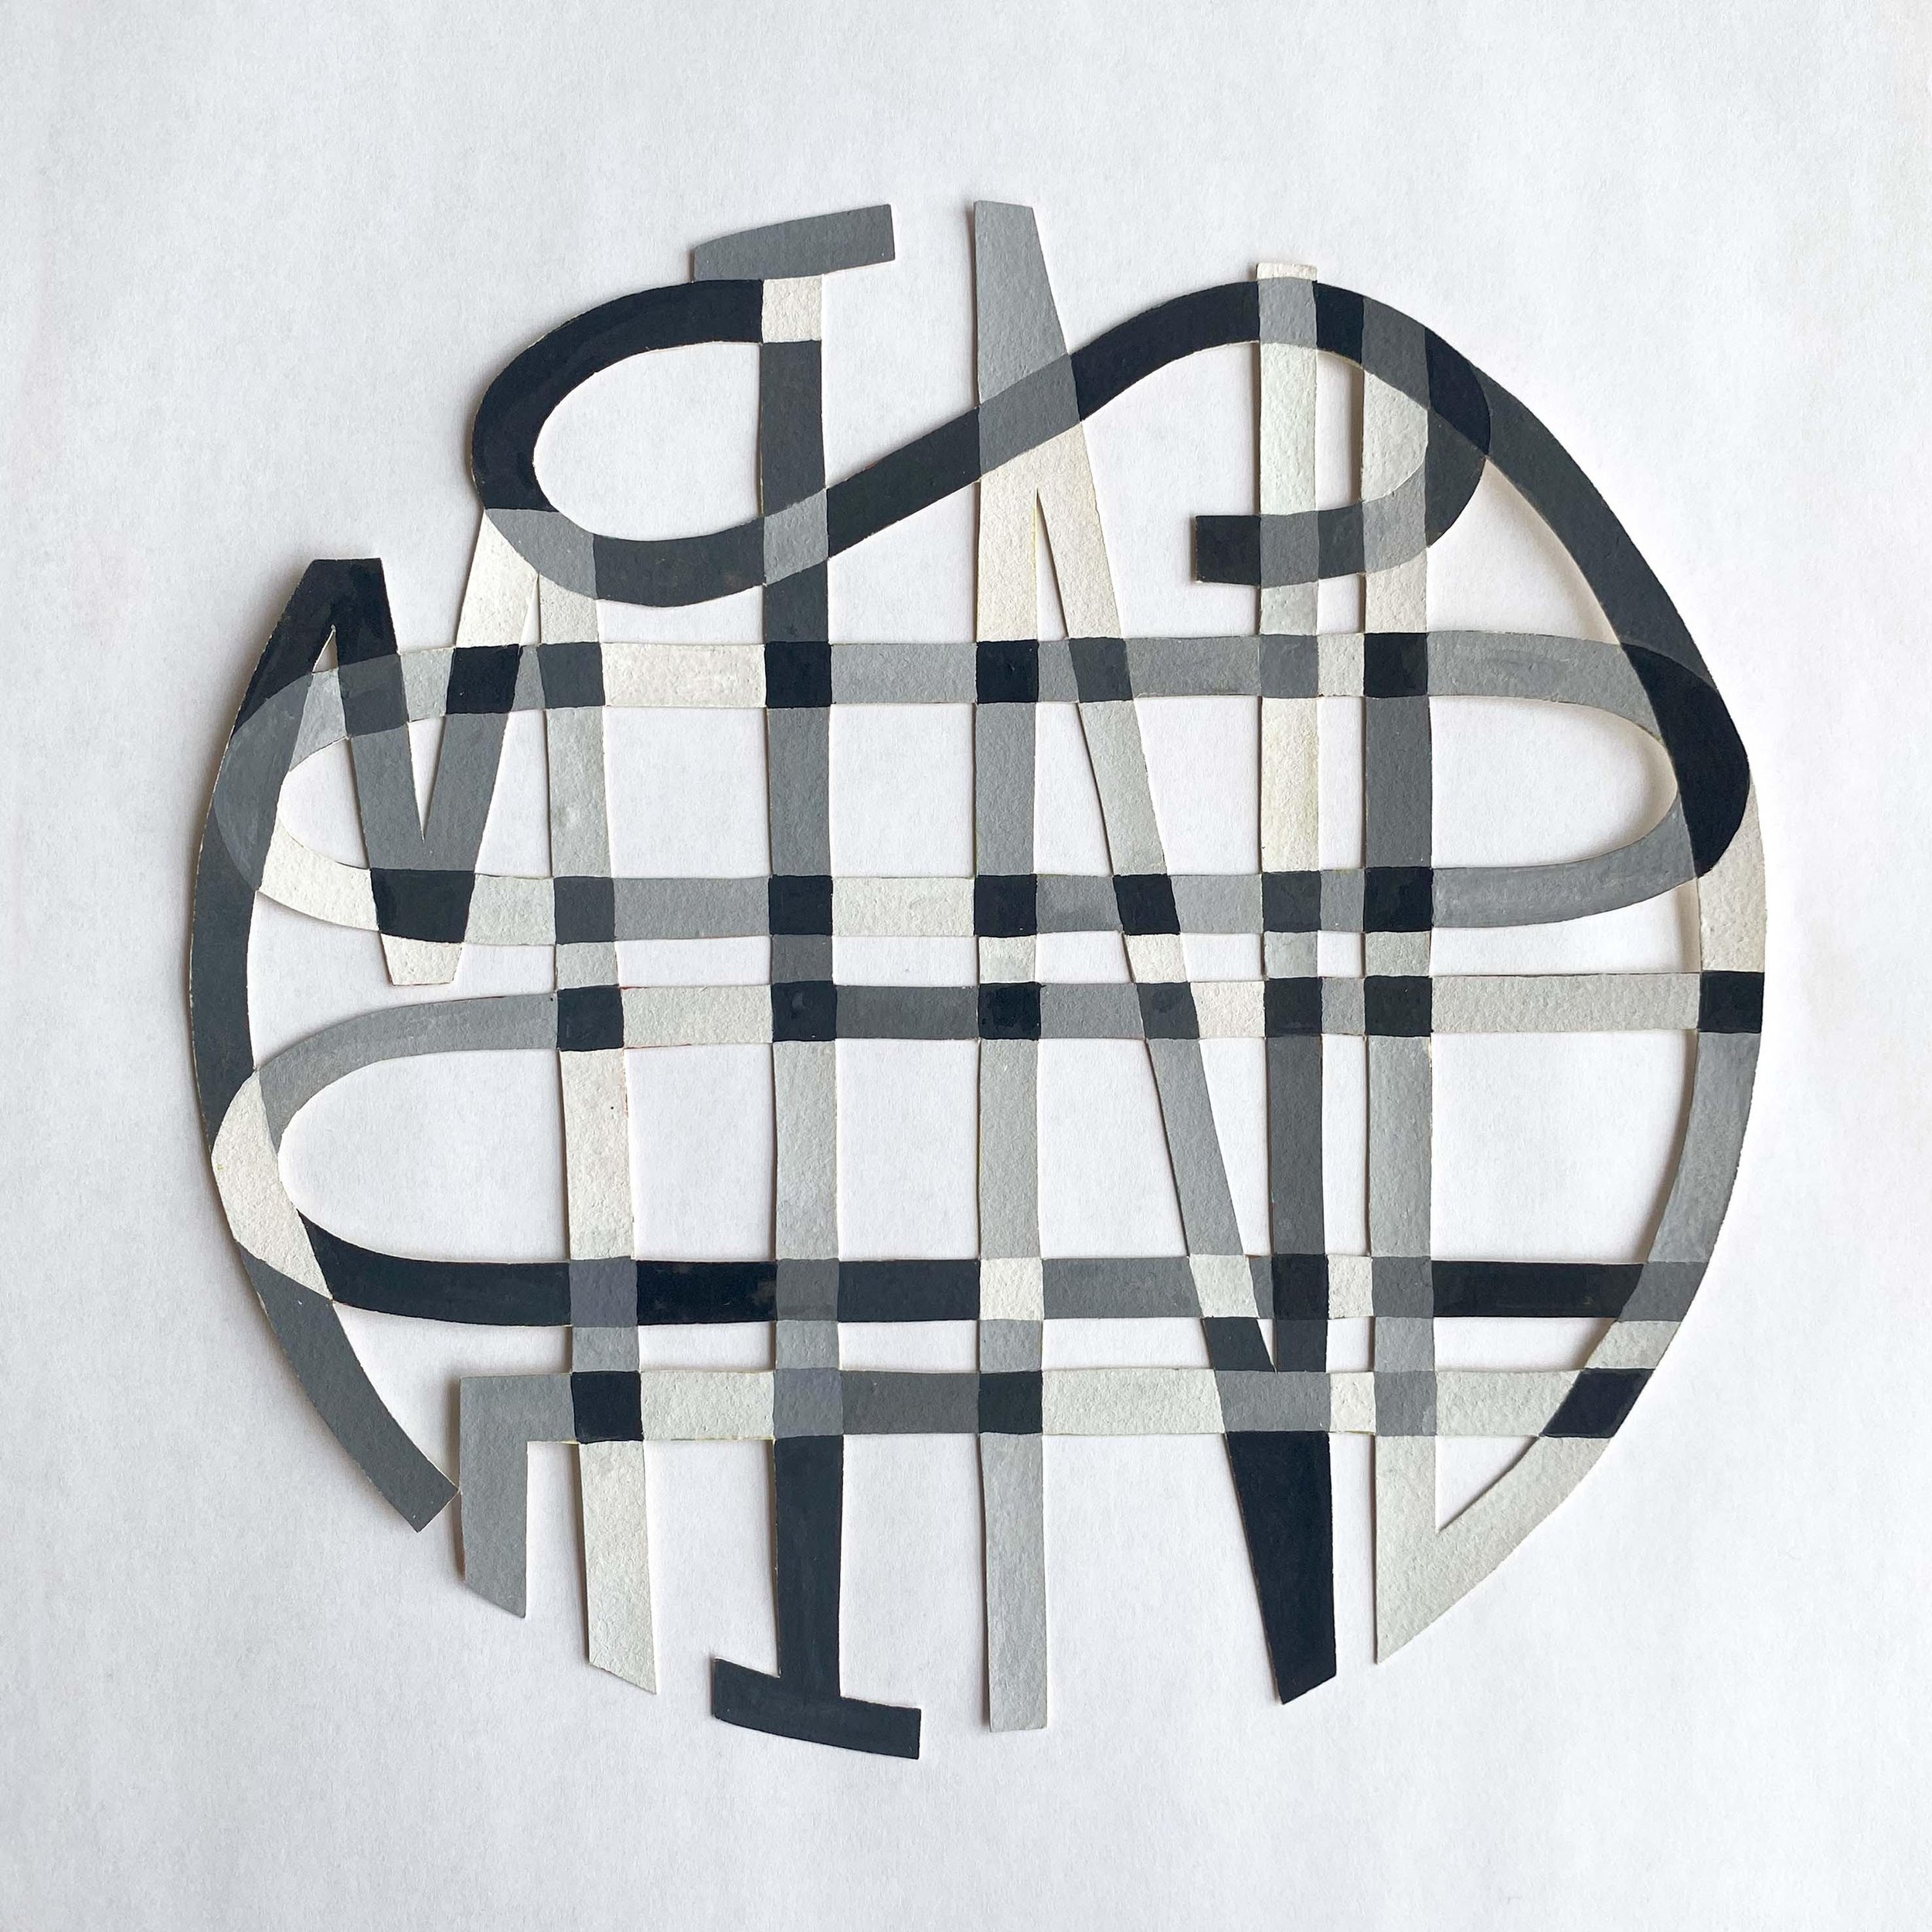   Anne Thompson ,  Mind / Soul , 2009, gouache on paper, 8.5” diameter  